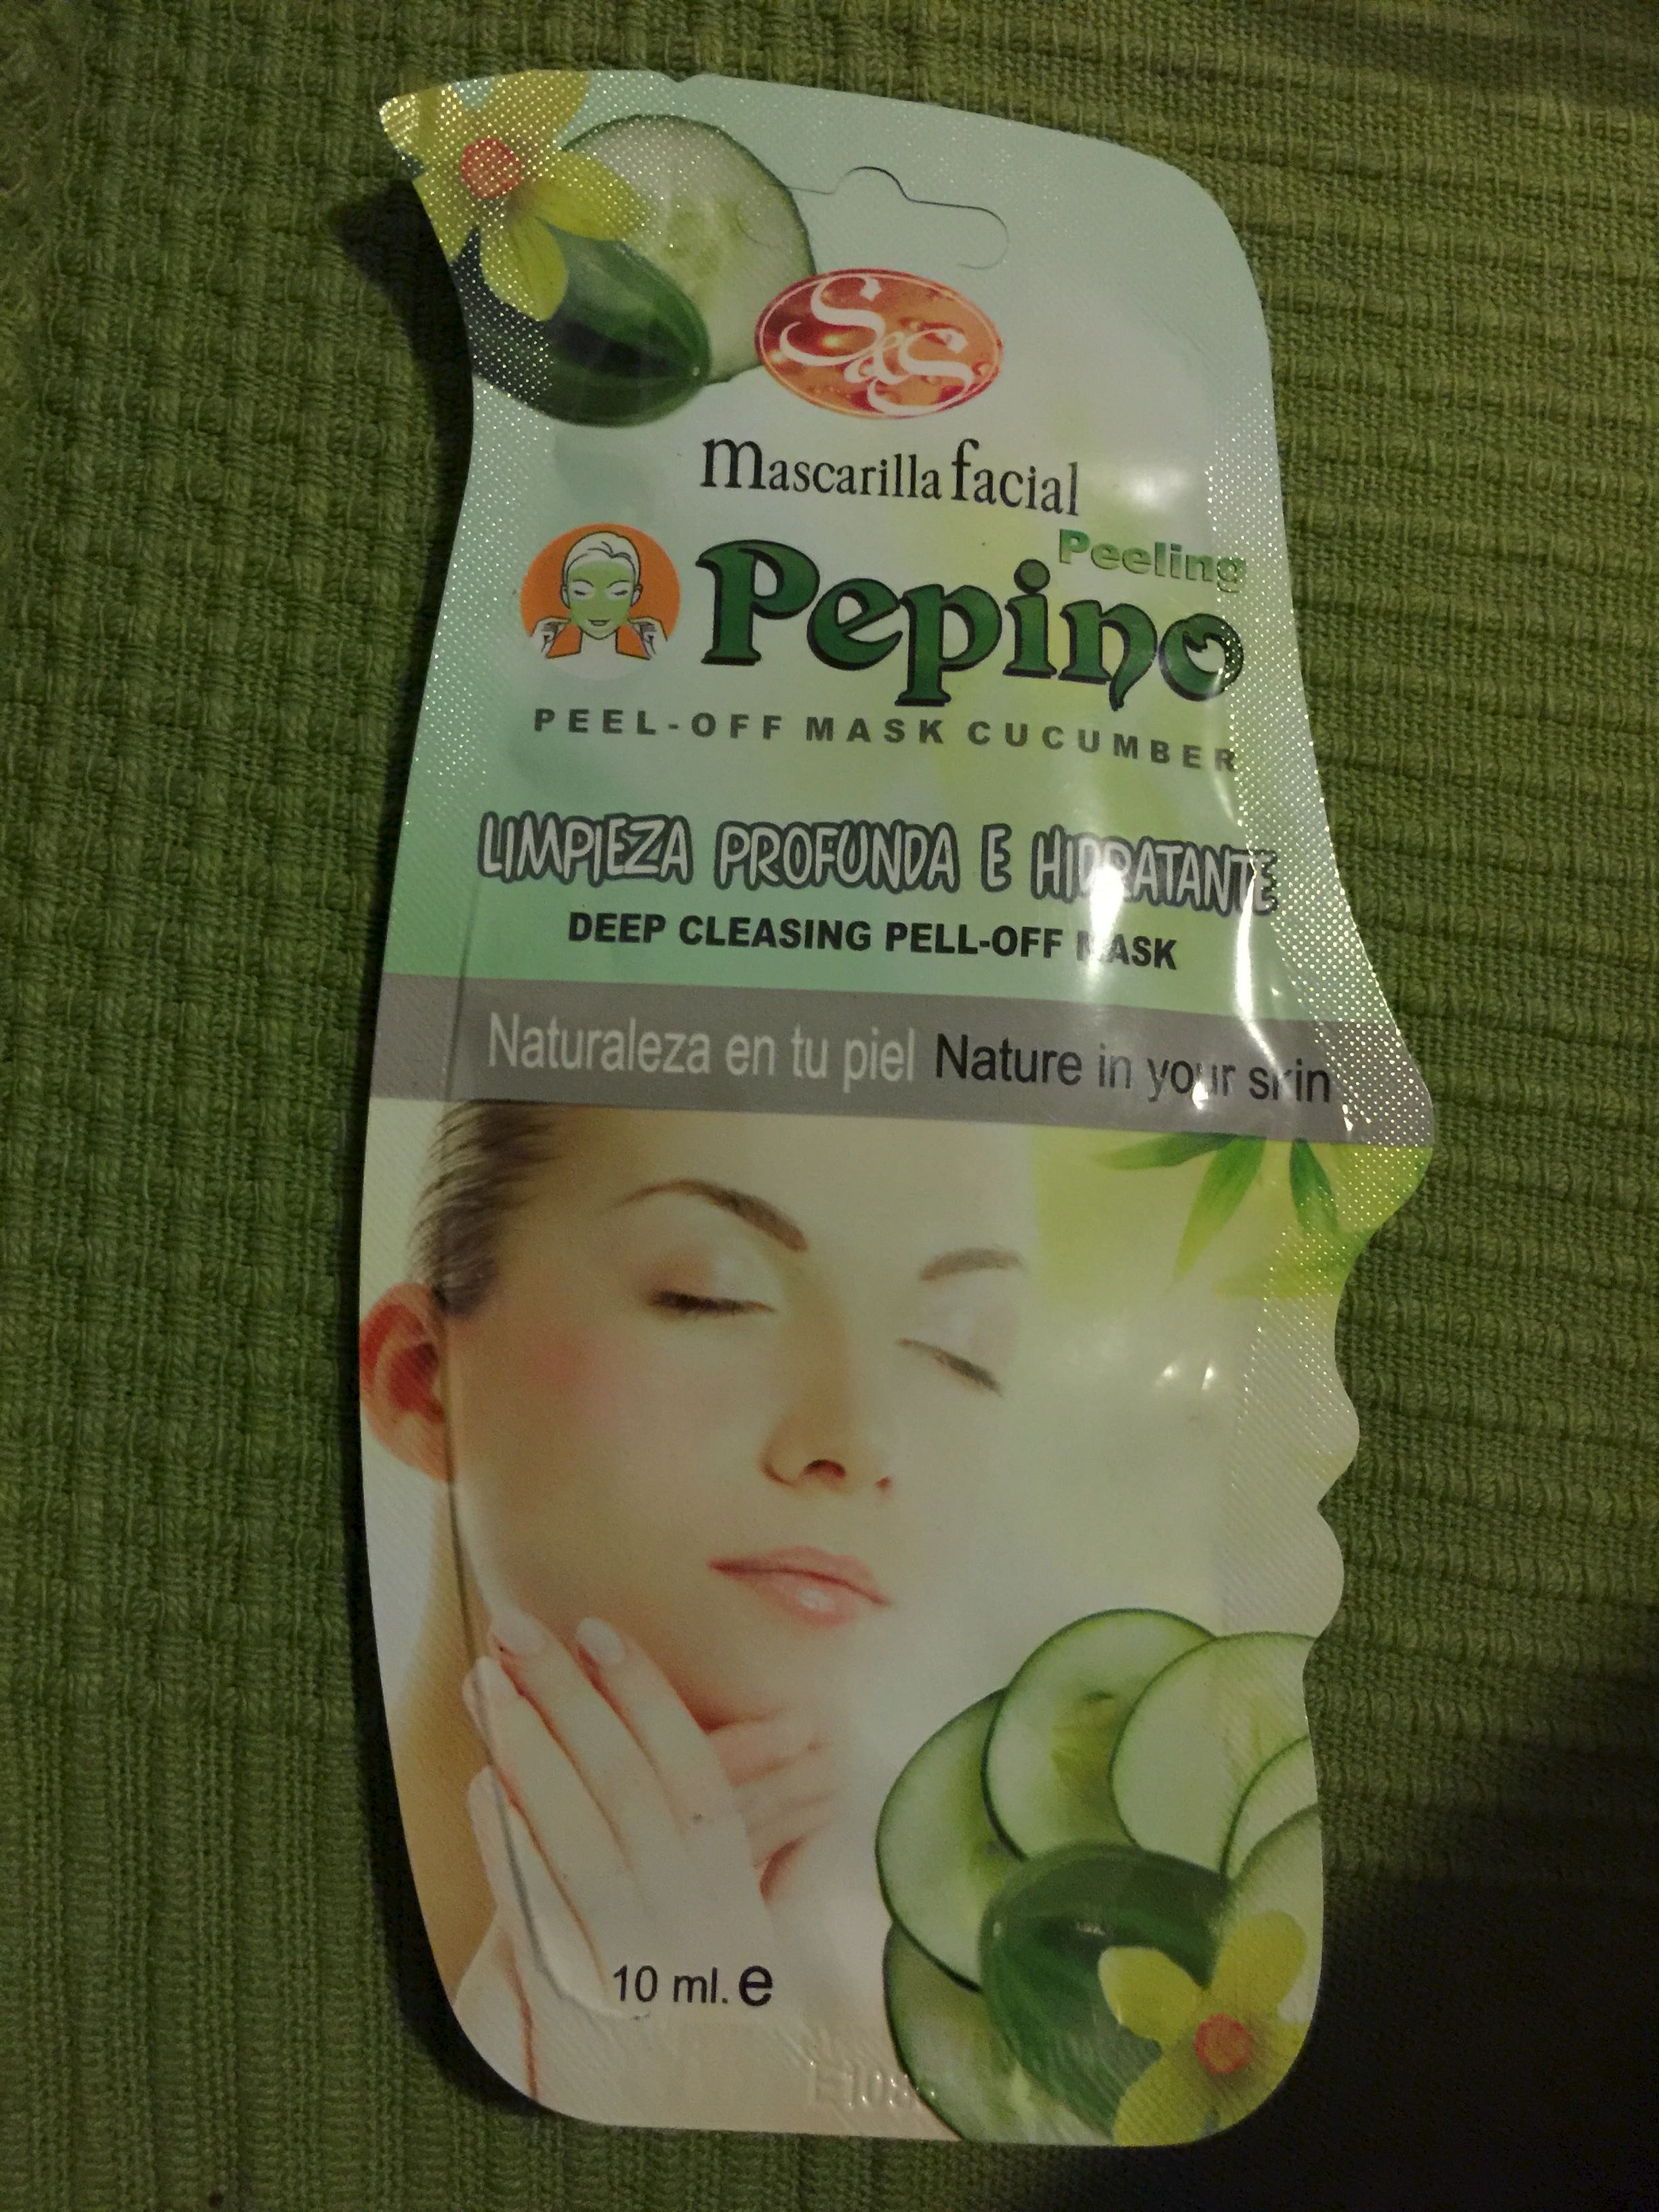 Mascarilla facial pepino - Product - es